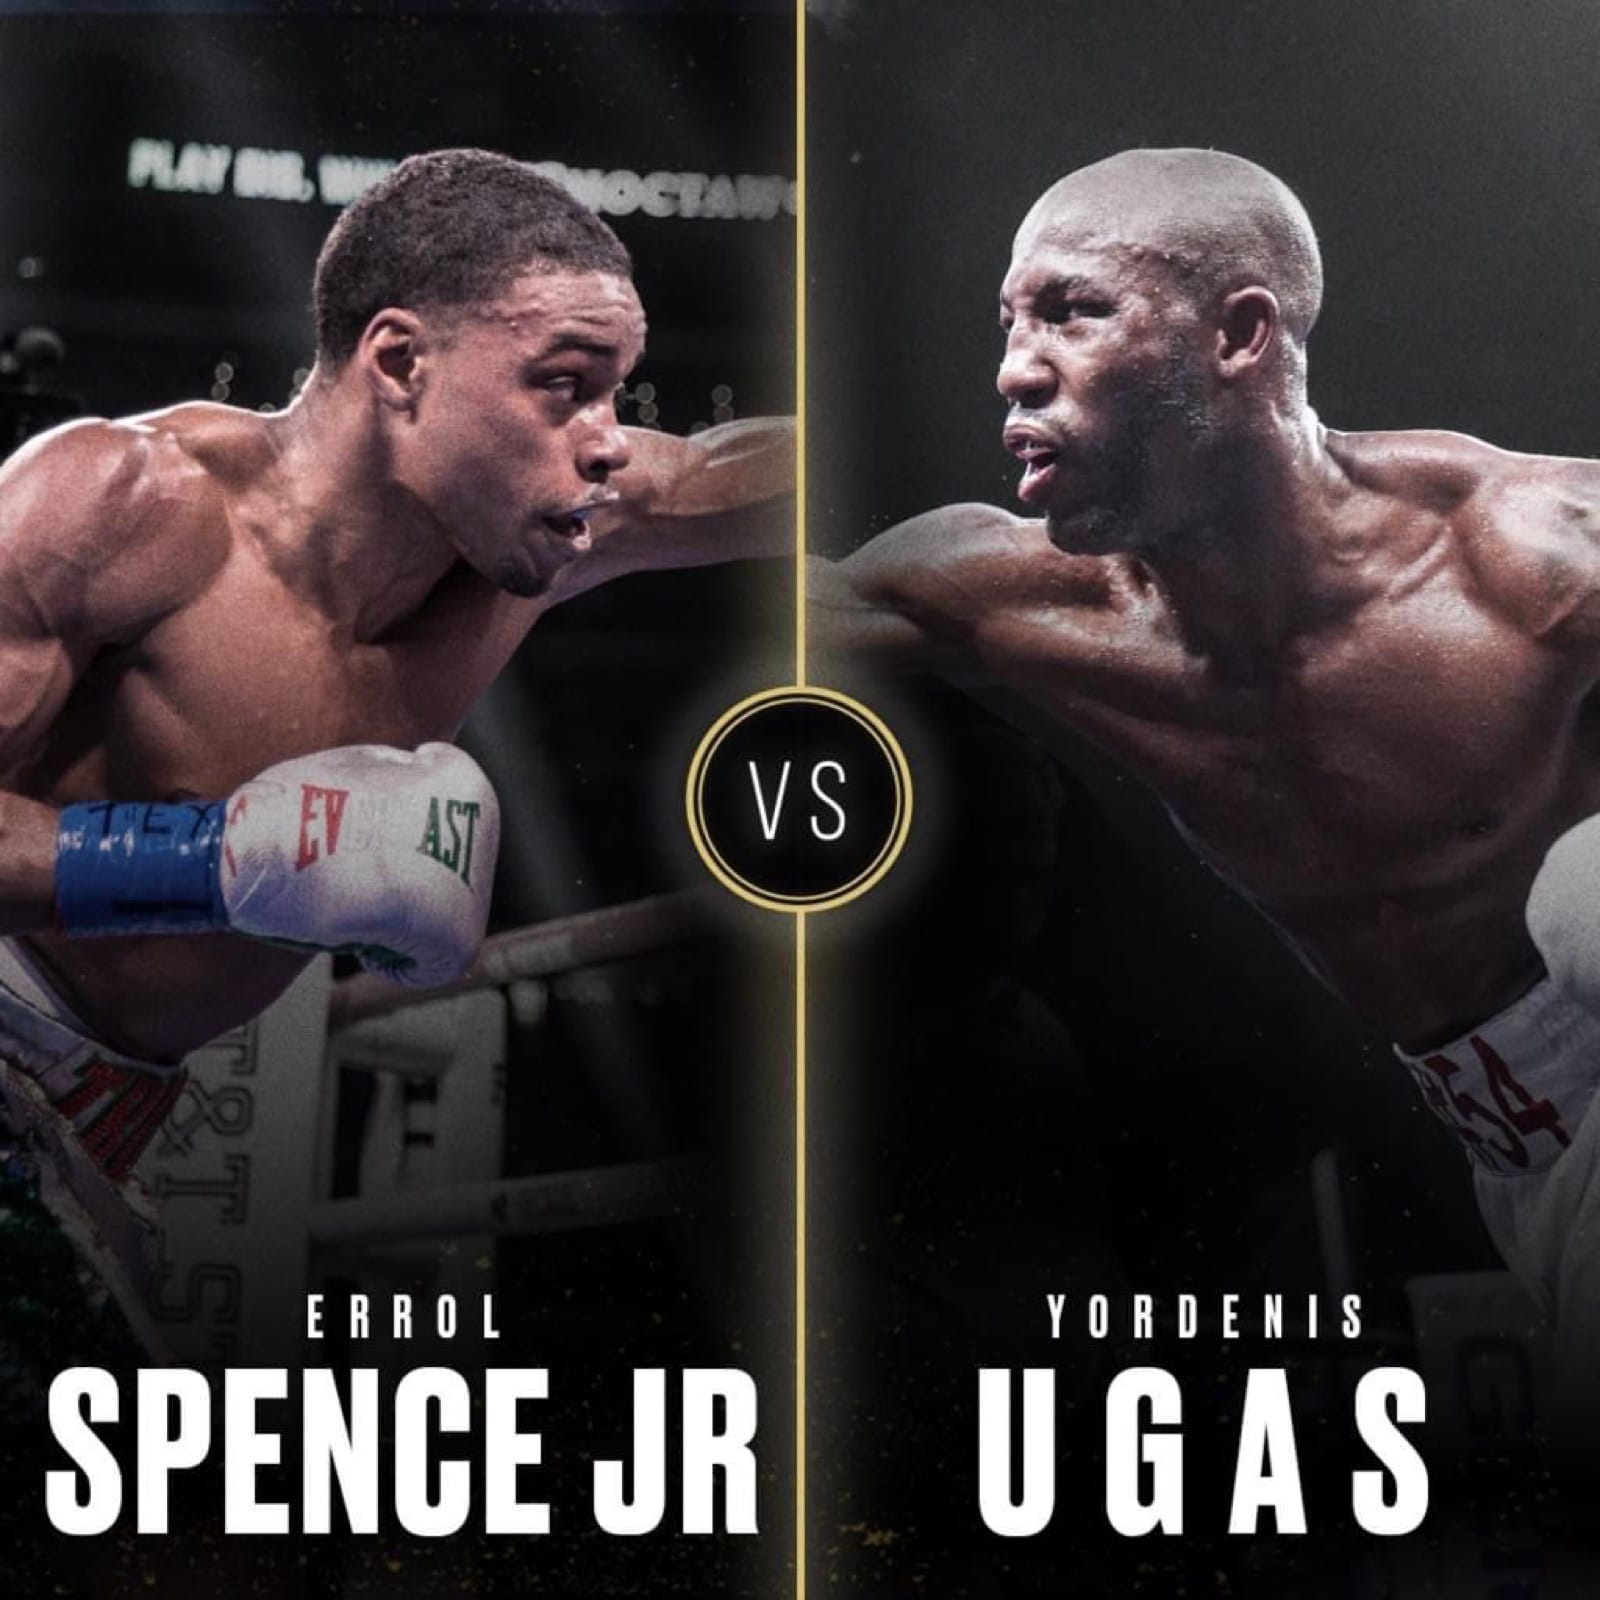 Errol Spence Jr., Yordenis Ugas boxing image / photo